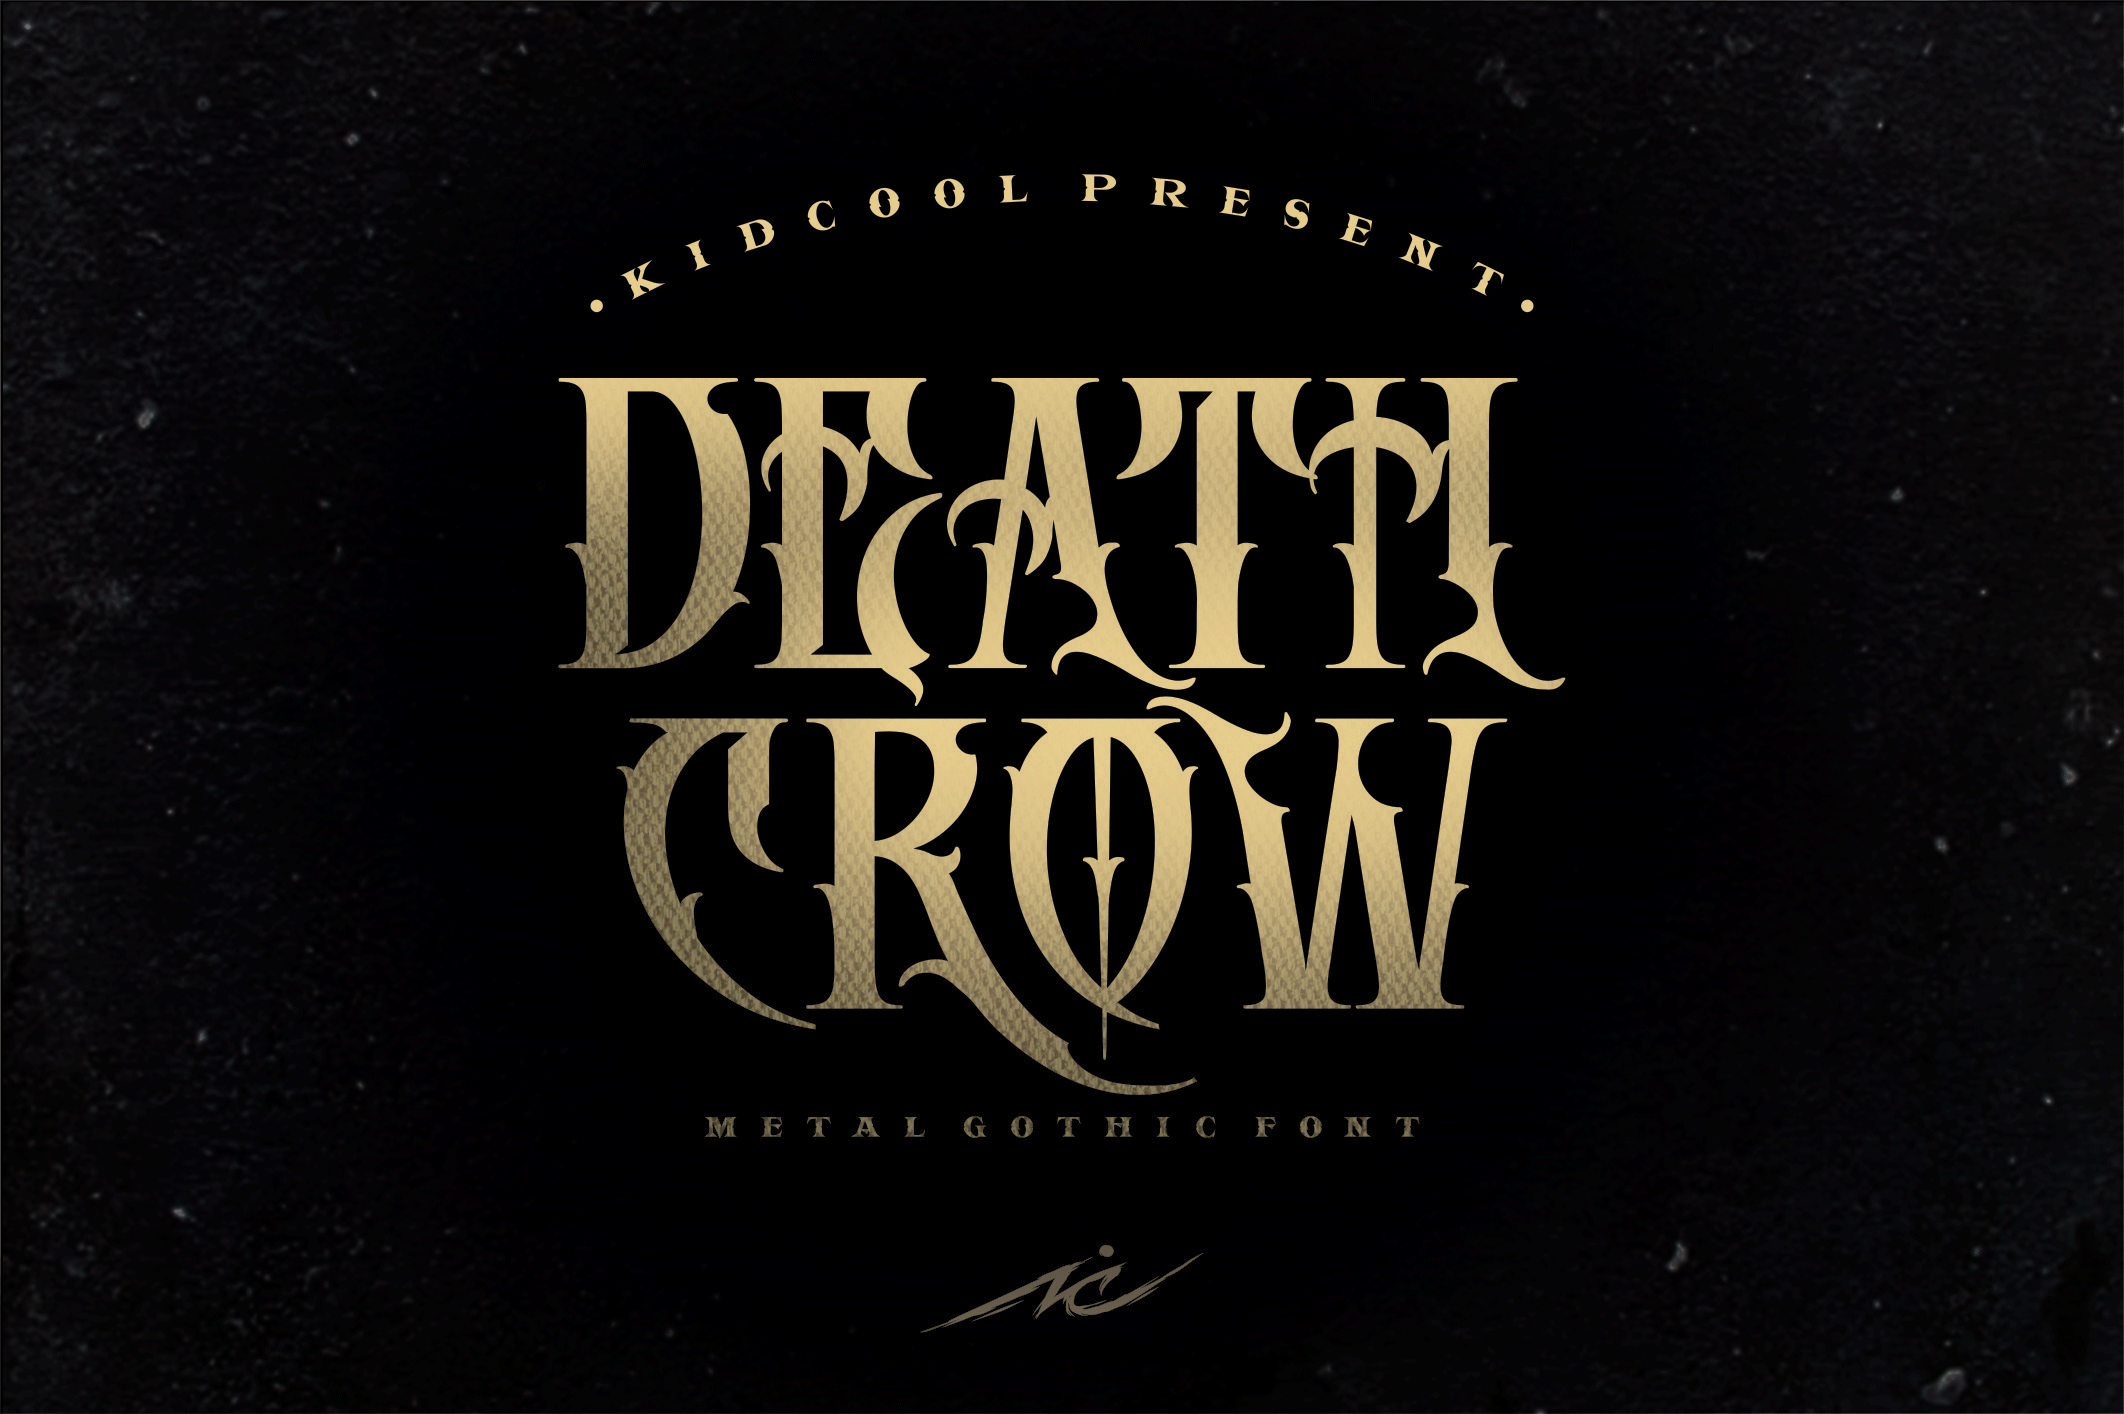 DEATH CROW